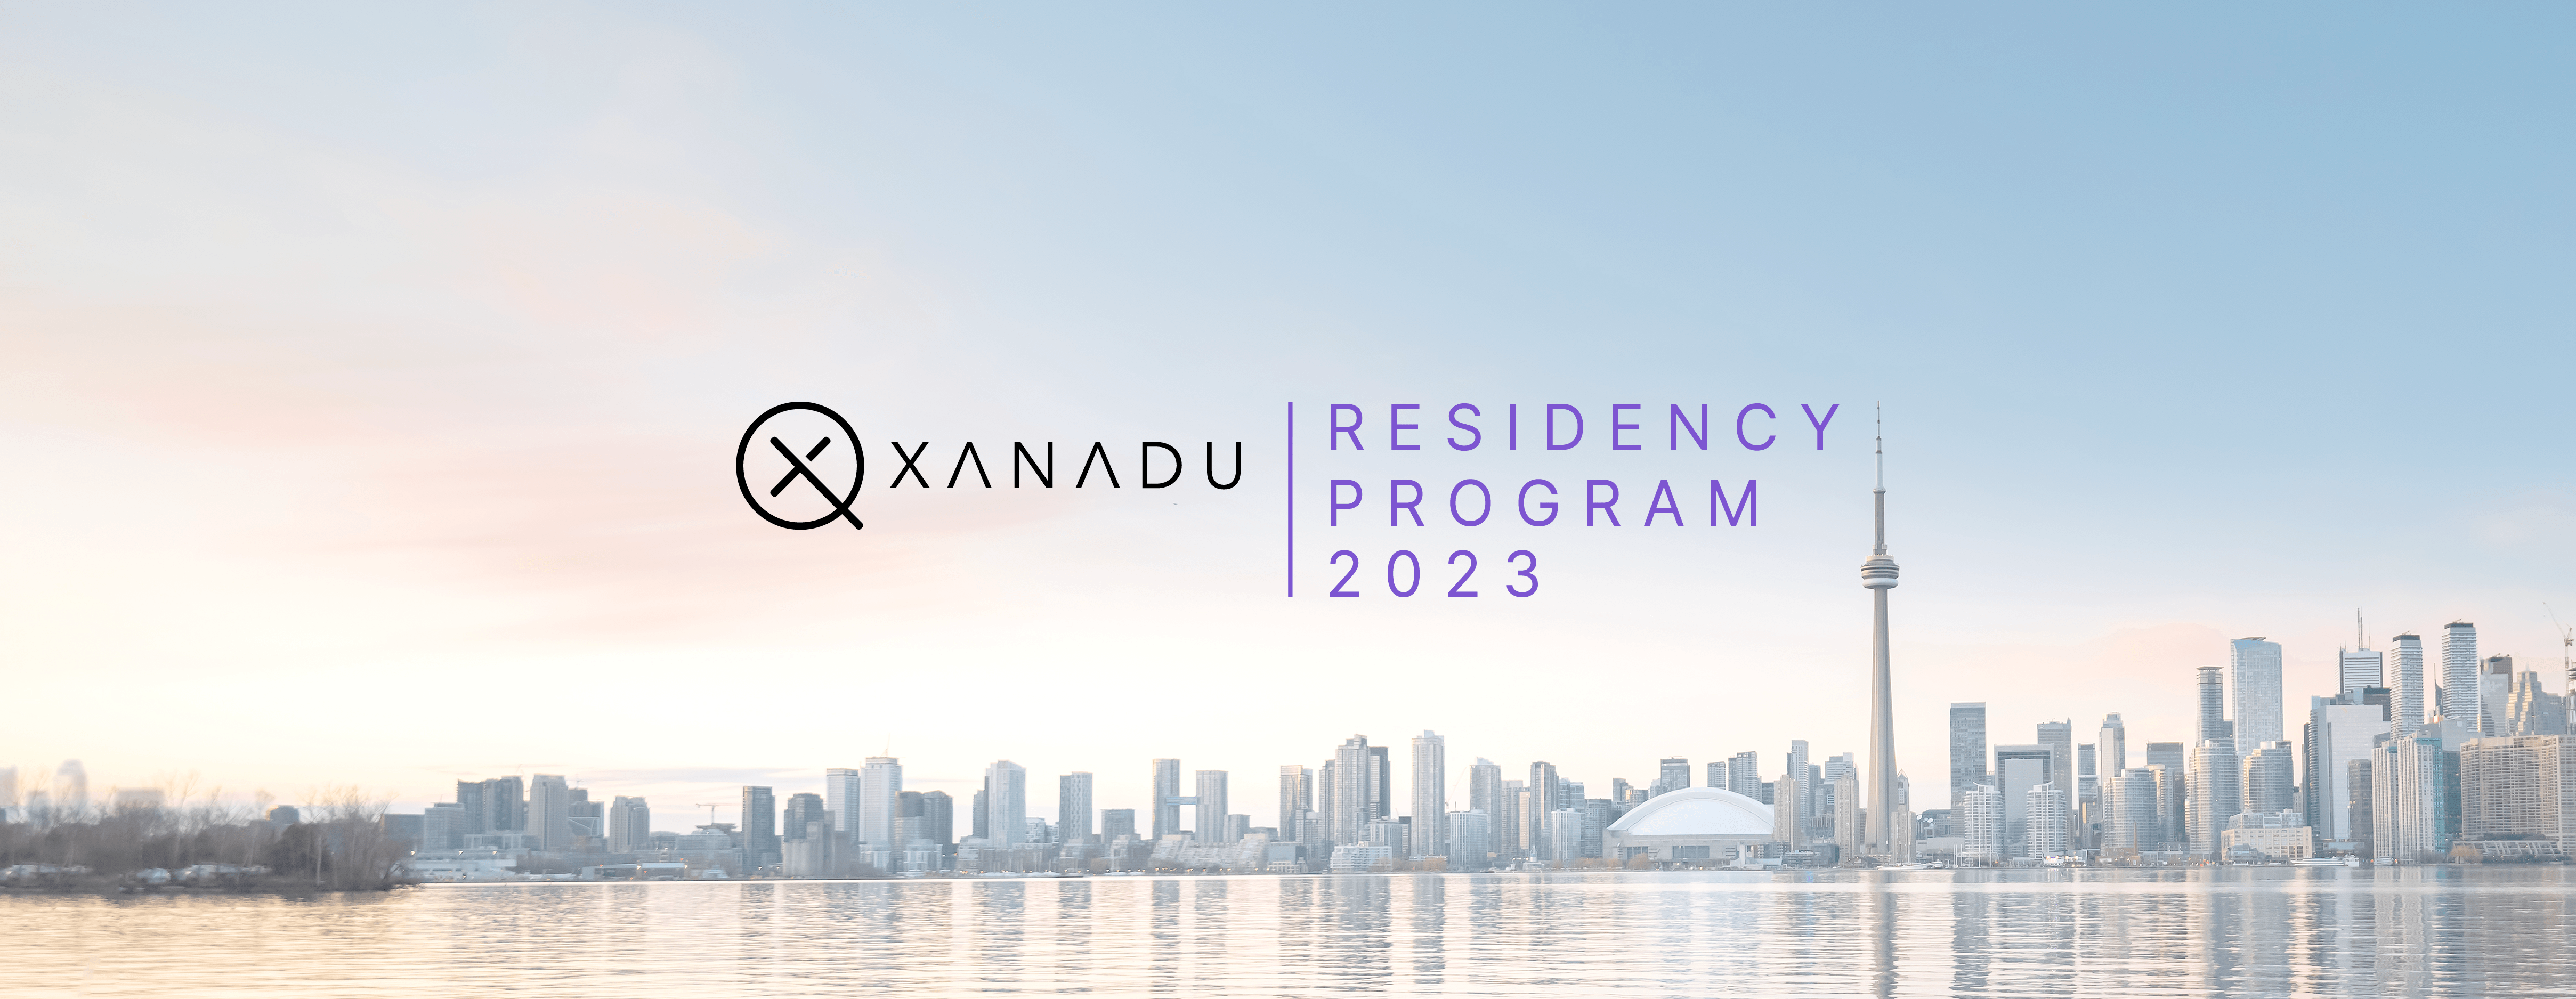 banner image: Xanadu 2023 Residency Program